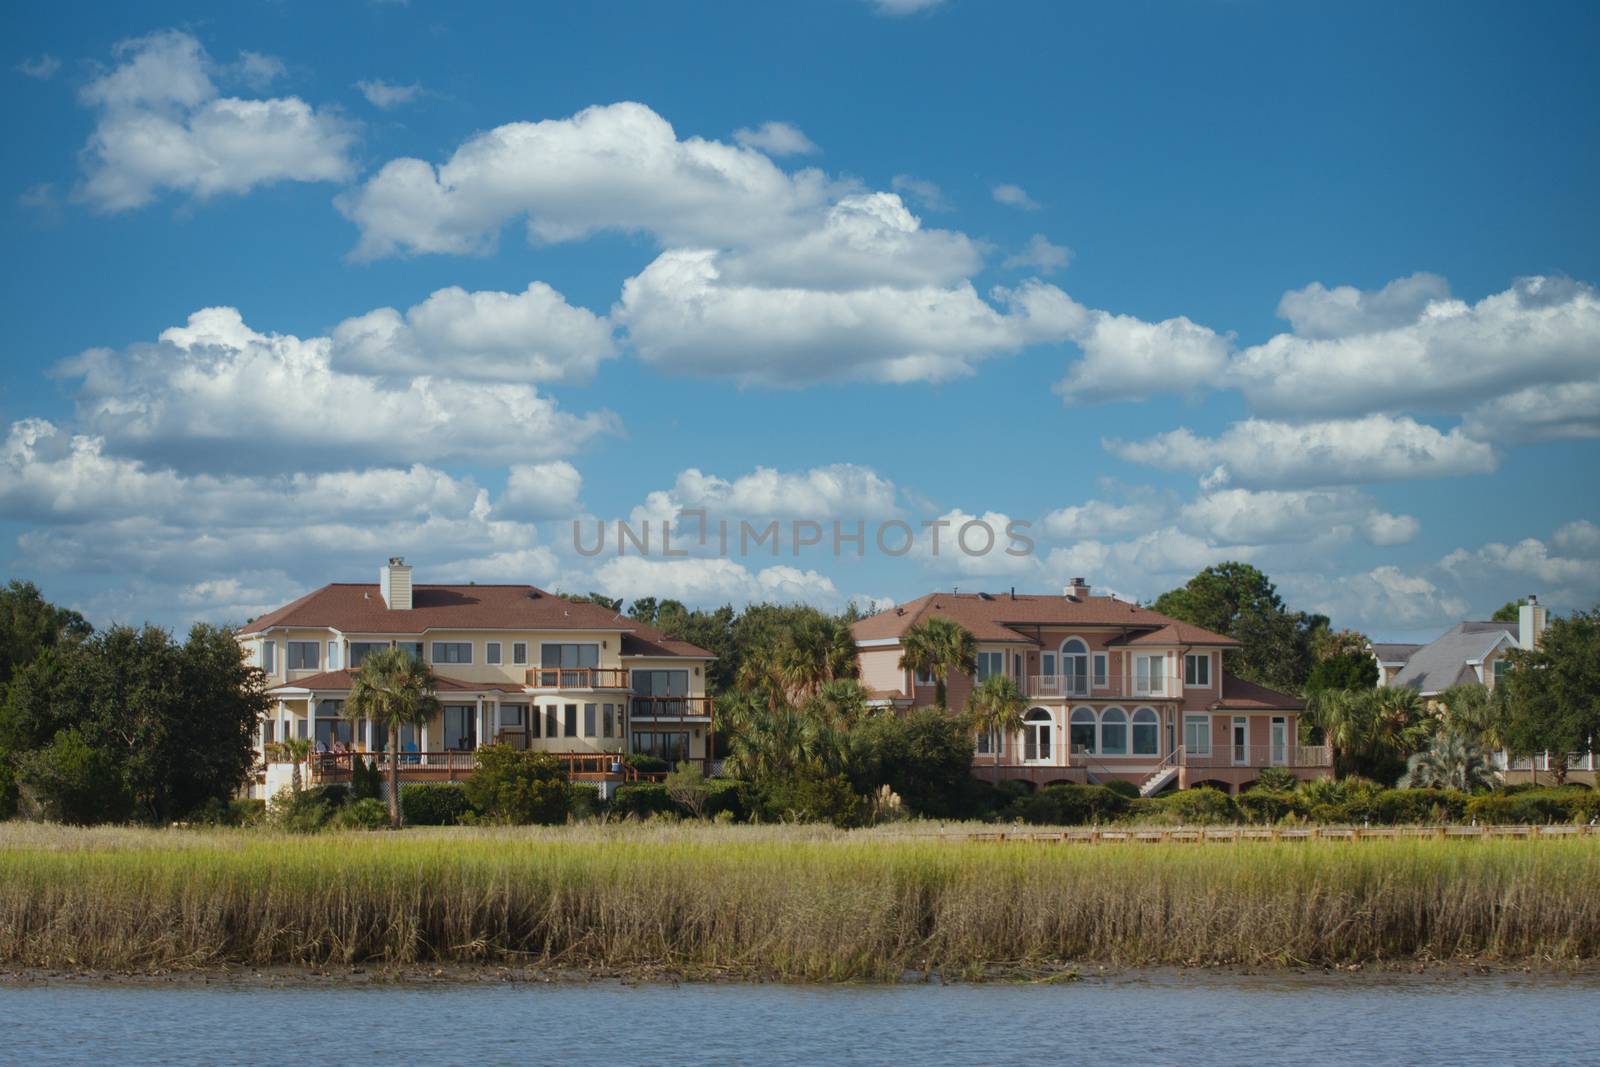 Luxury Homes Beyond Coastal Salt Marsh by dbvirago